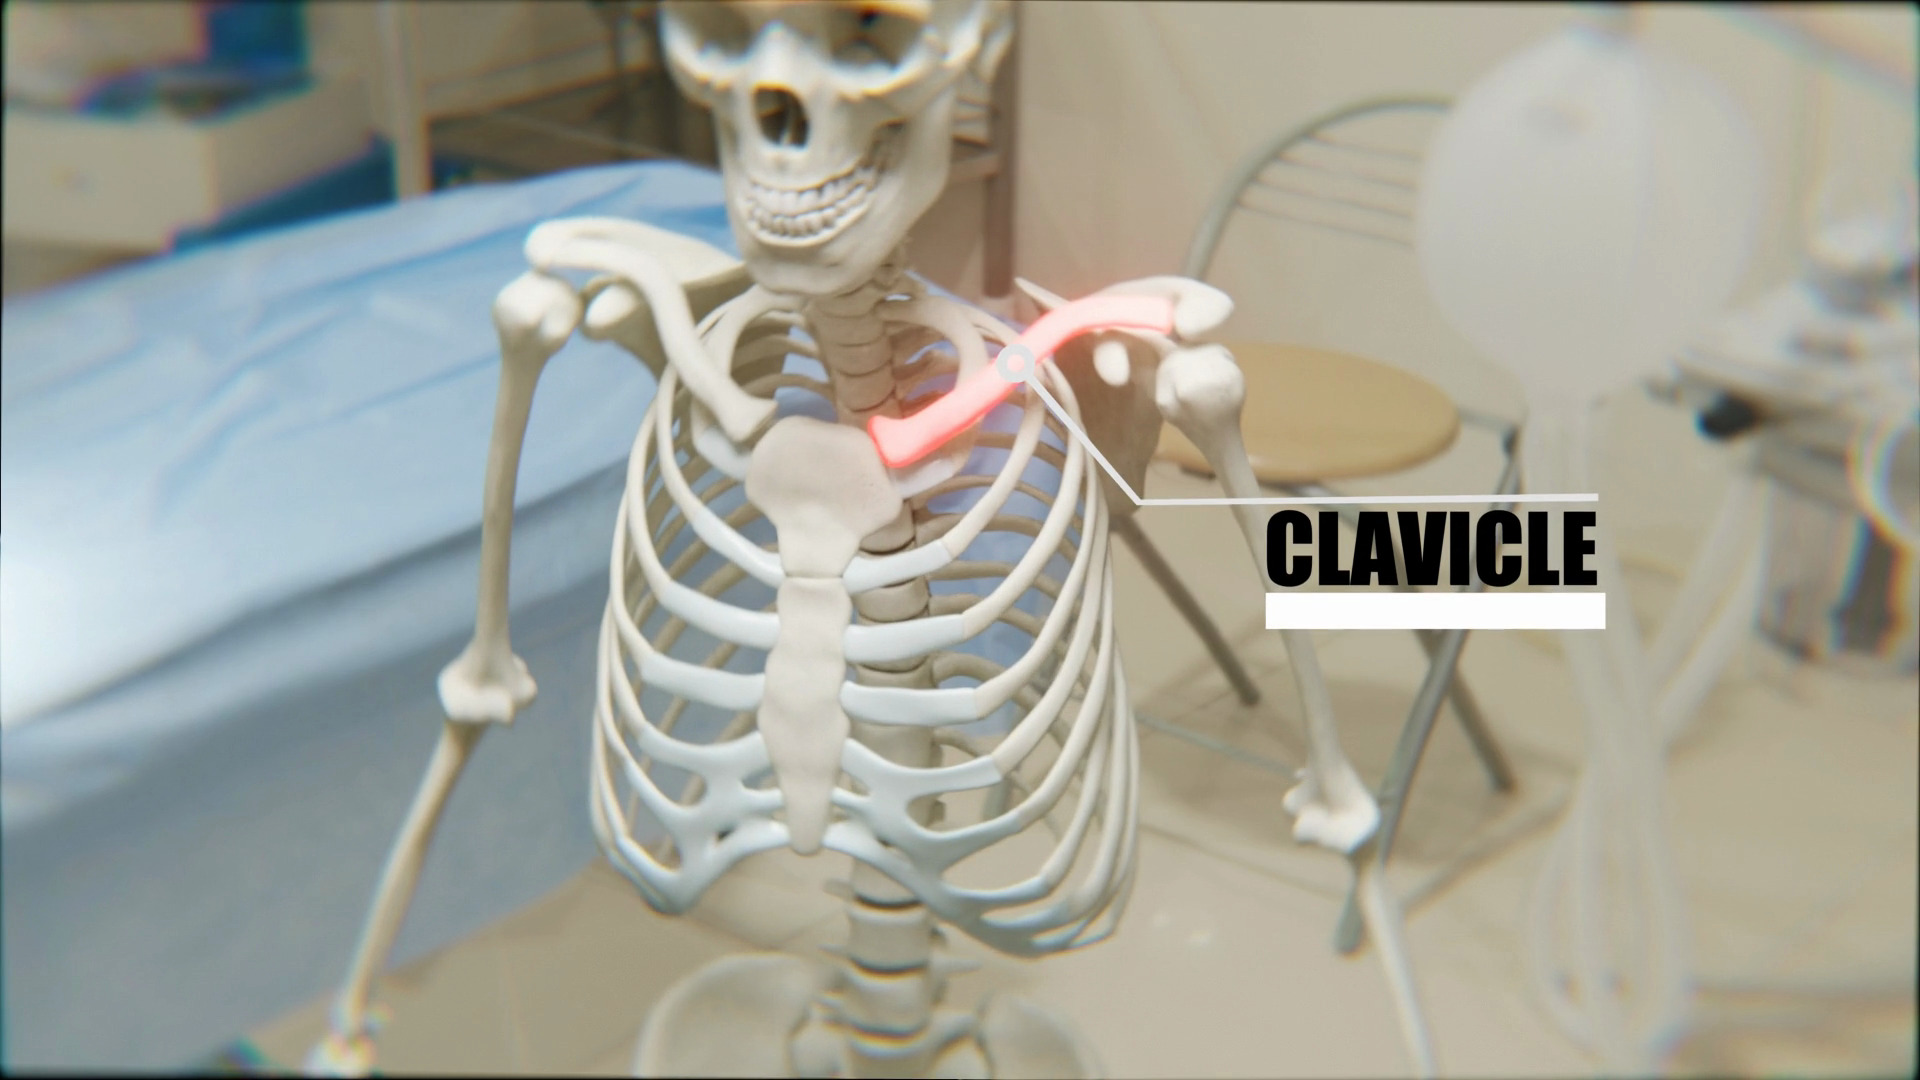 Anatomy of Clavicle